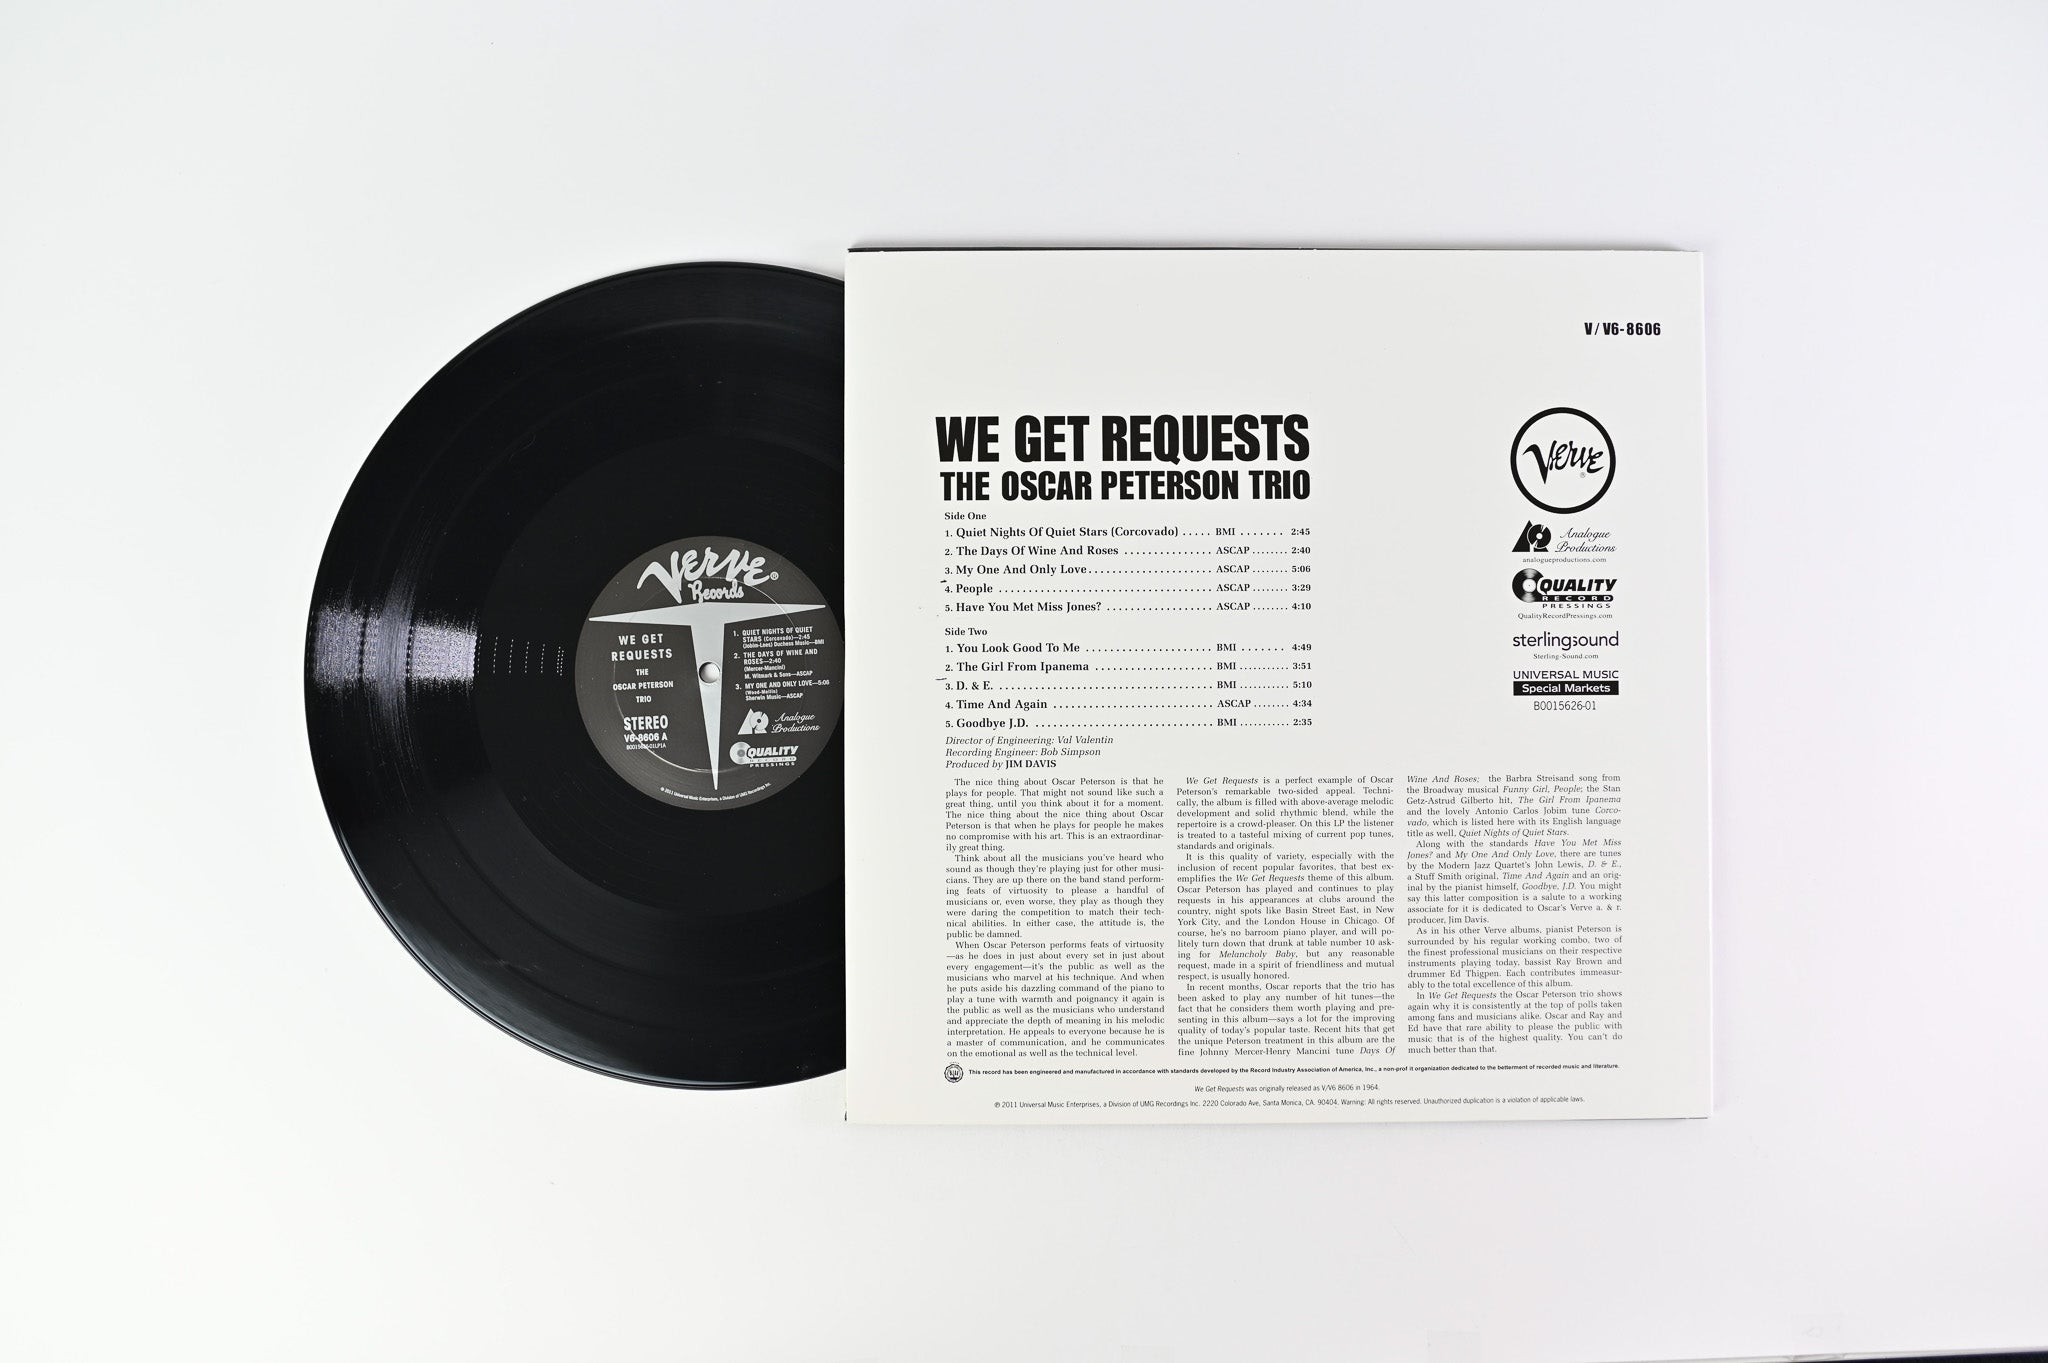 The Oscar Peterson Trio - We Get Requests on Verve Analogue Productions Ltd 200 Gram 45 RPM Reissue